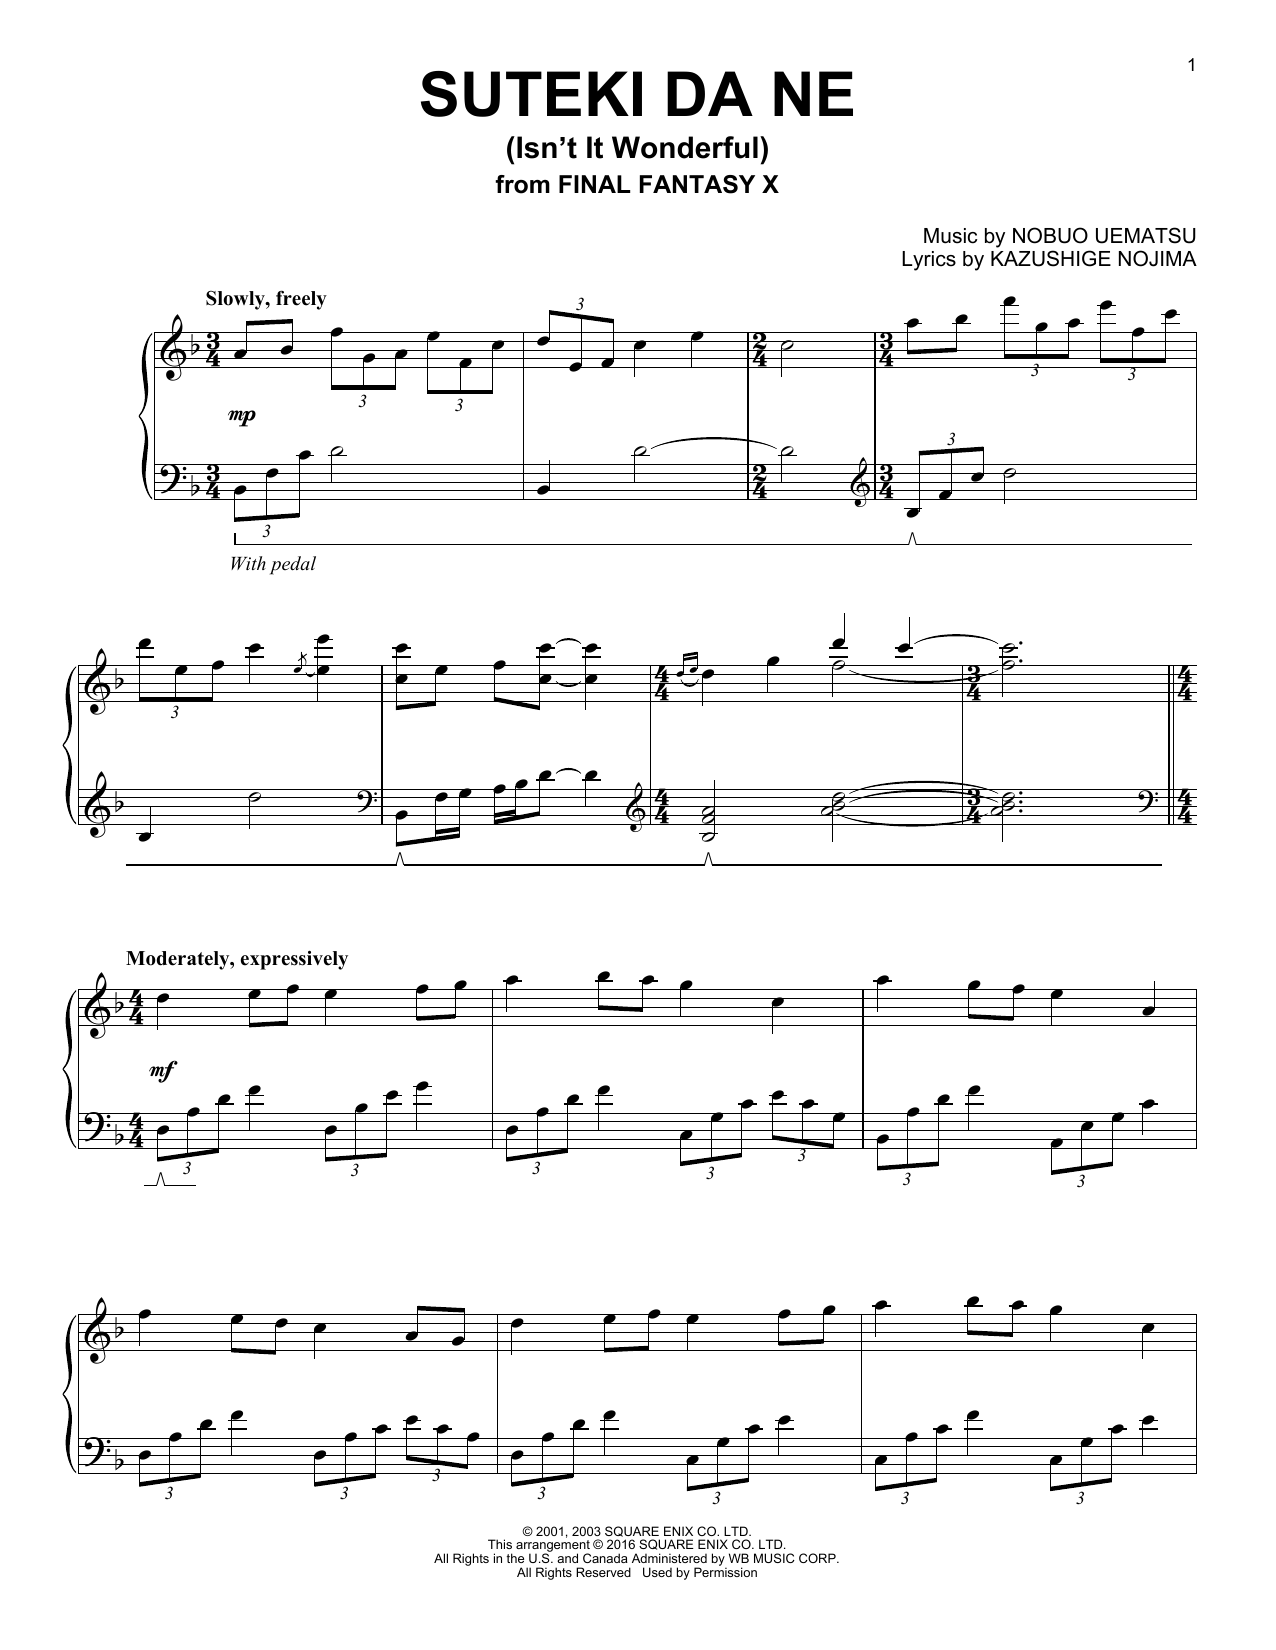 Download Kazushige Nojima Suteki Da Ne (Isn't It Wonderful) Sheet Music and learn how to play Piano PDF digital score in minutes